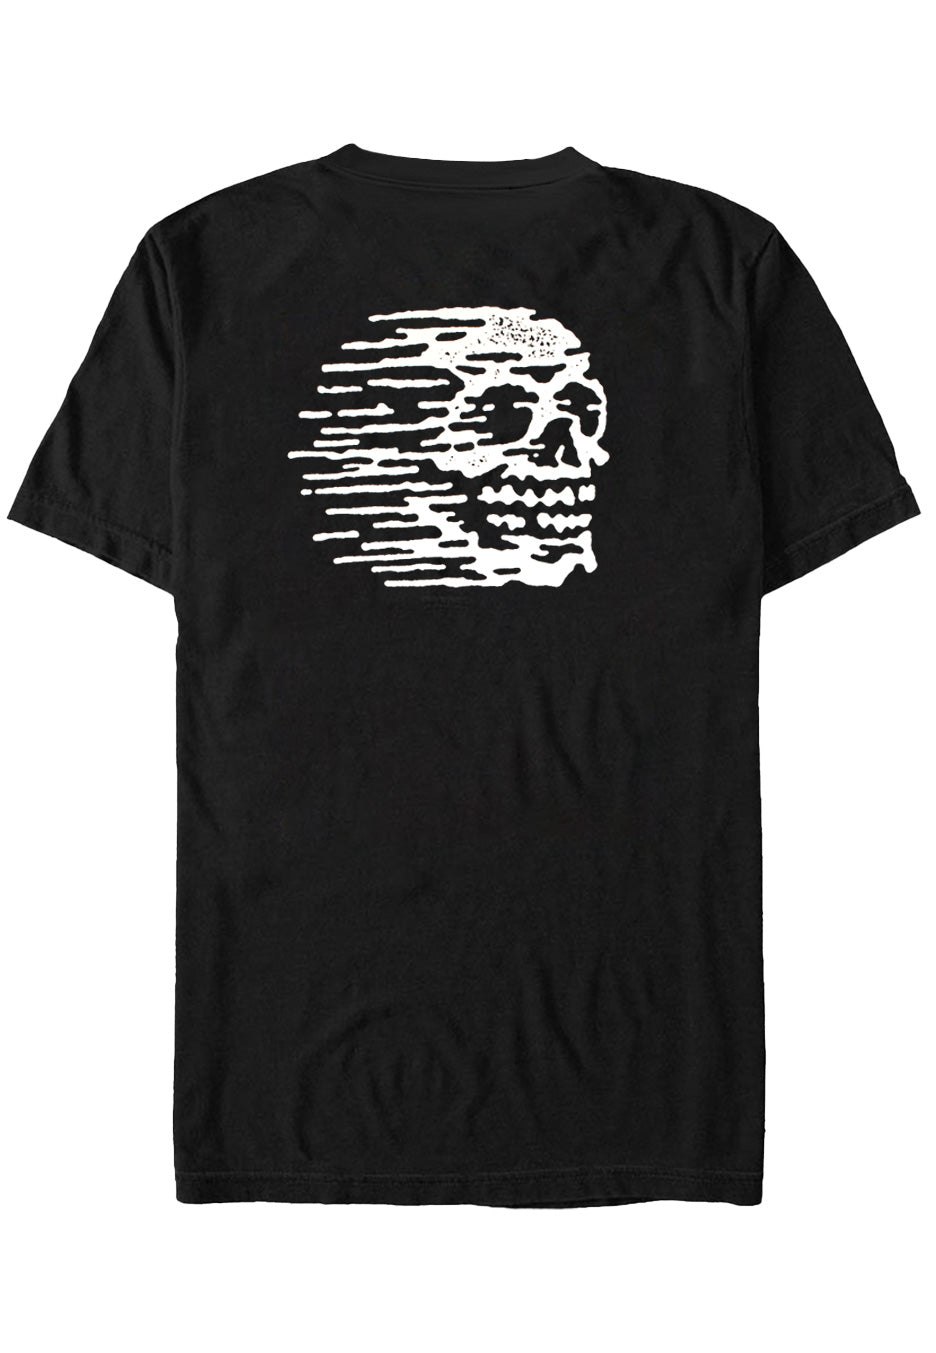 Nuclear Blast Merchandise - Blasthead - T-Shirt